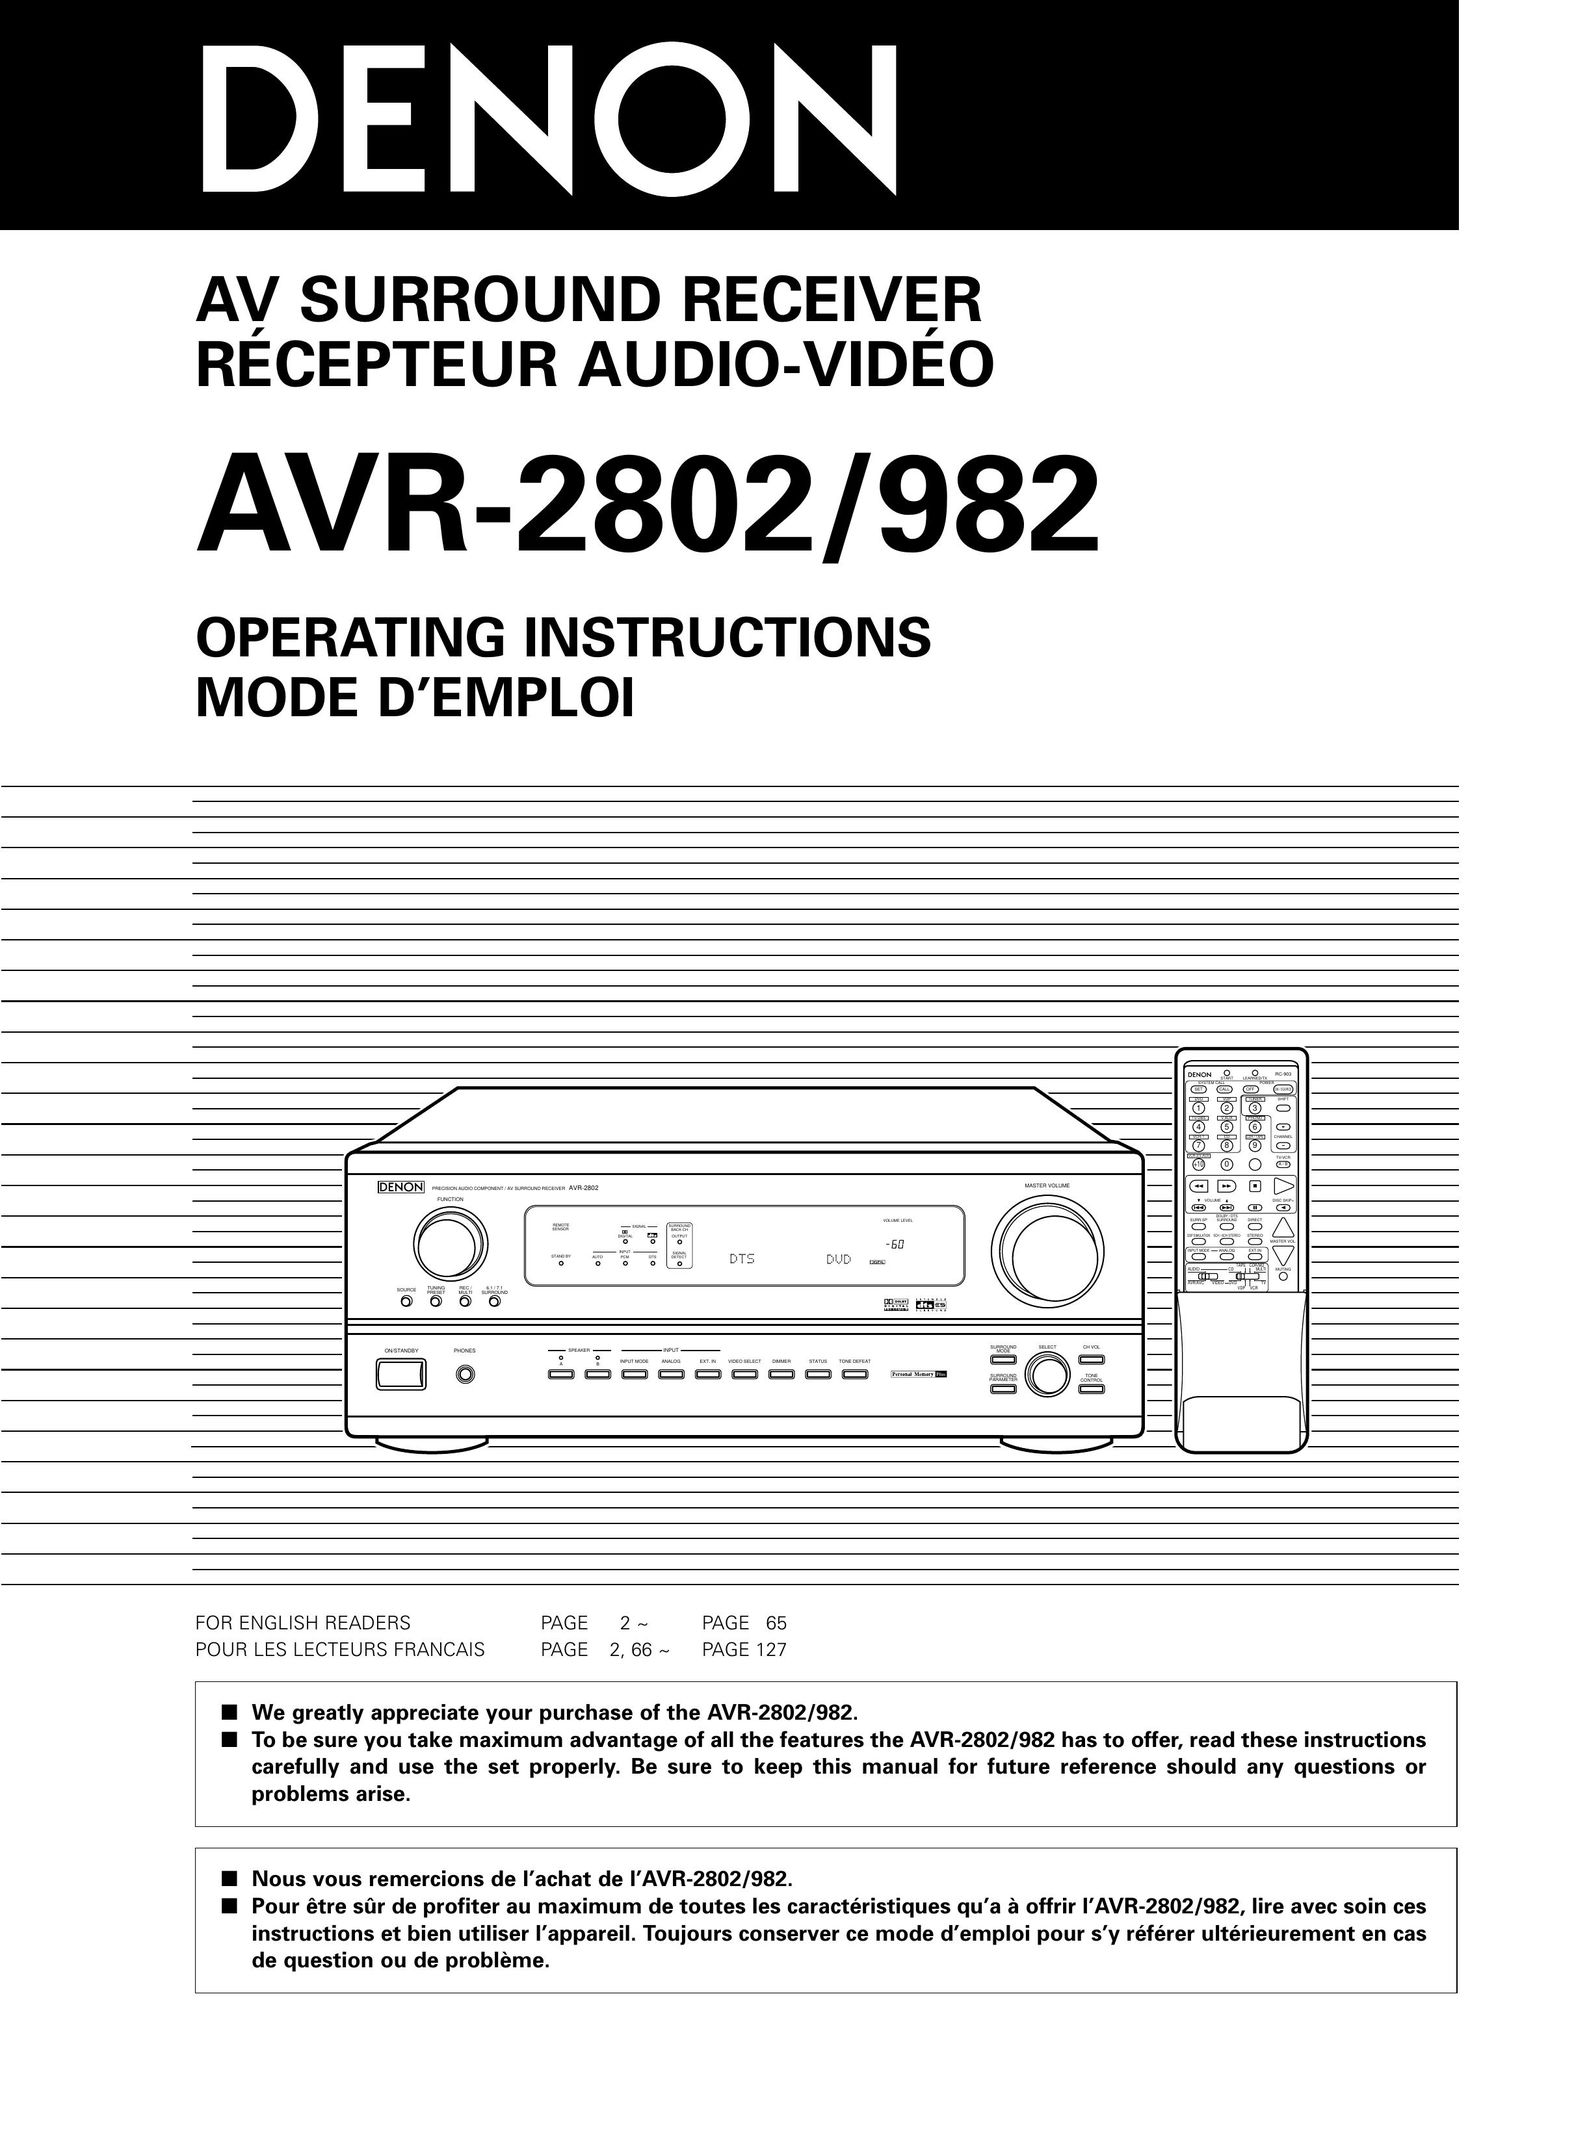 Denon AVR-2802/982 Stereo Receiver User Manual